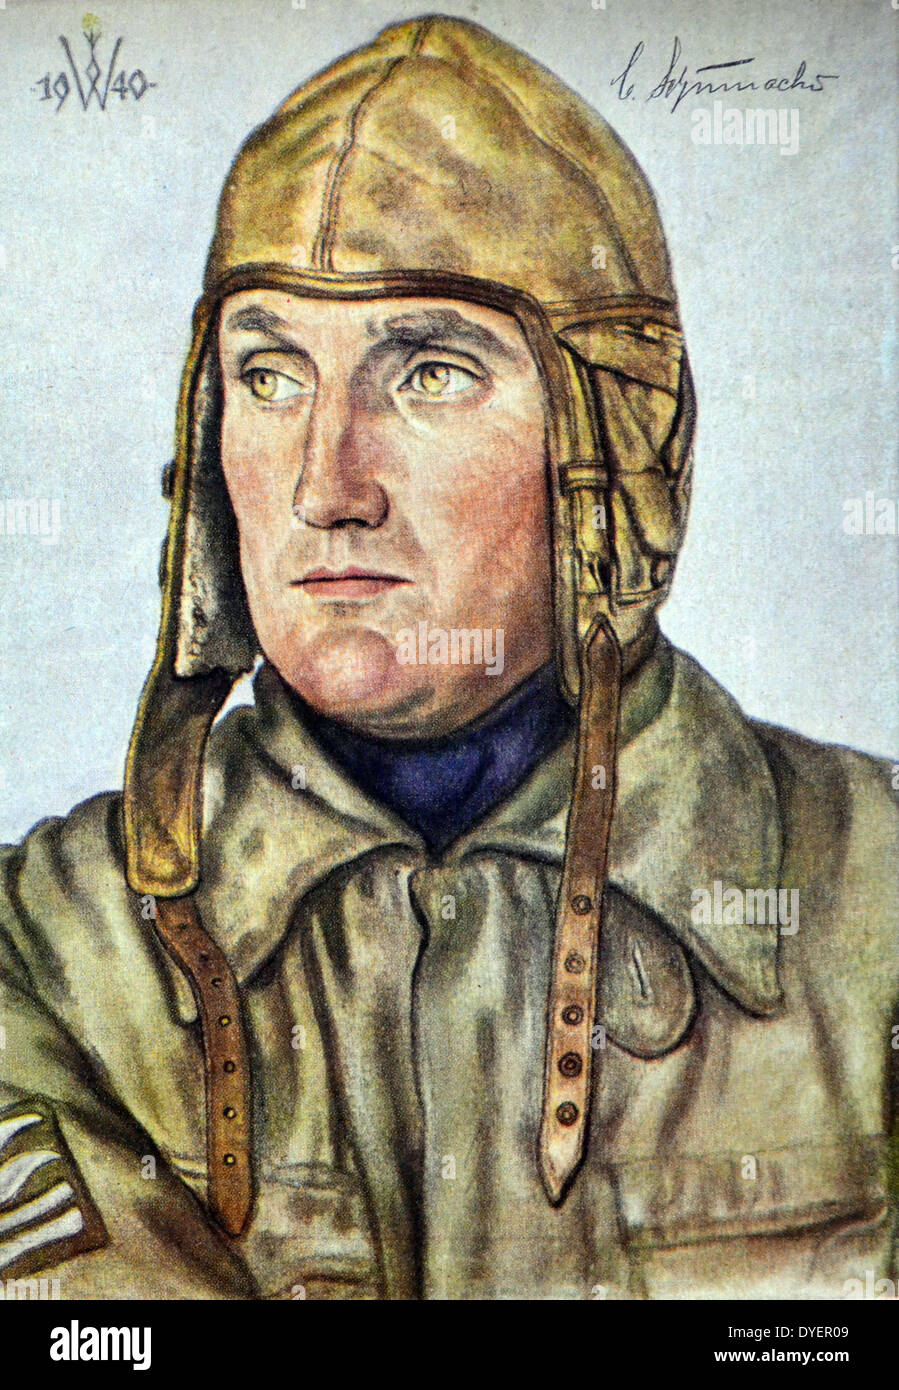 Generalmajor Carl-Alfred (August) Schumacher 1896 -1967. During World War II